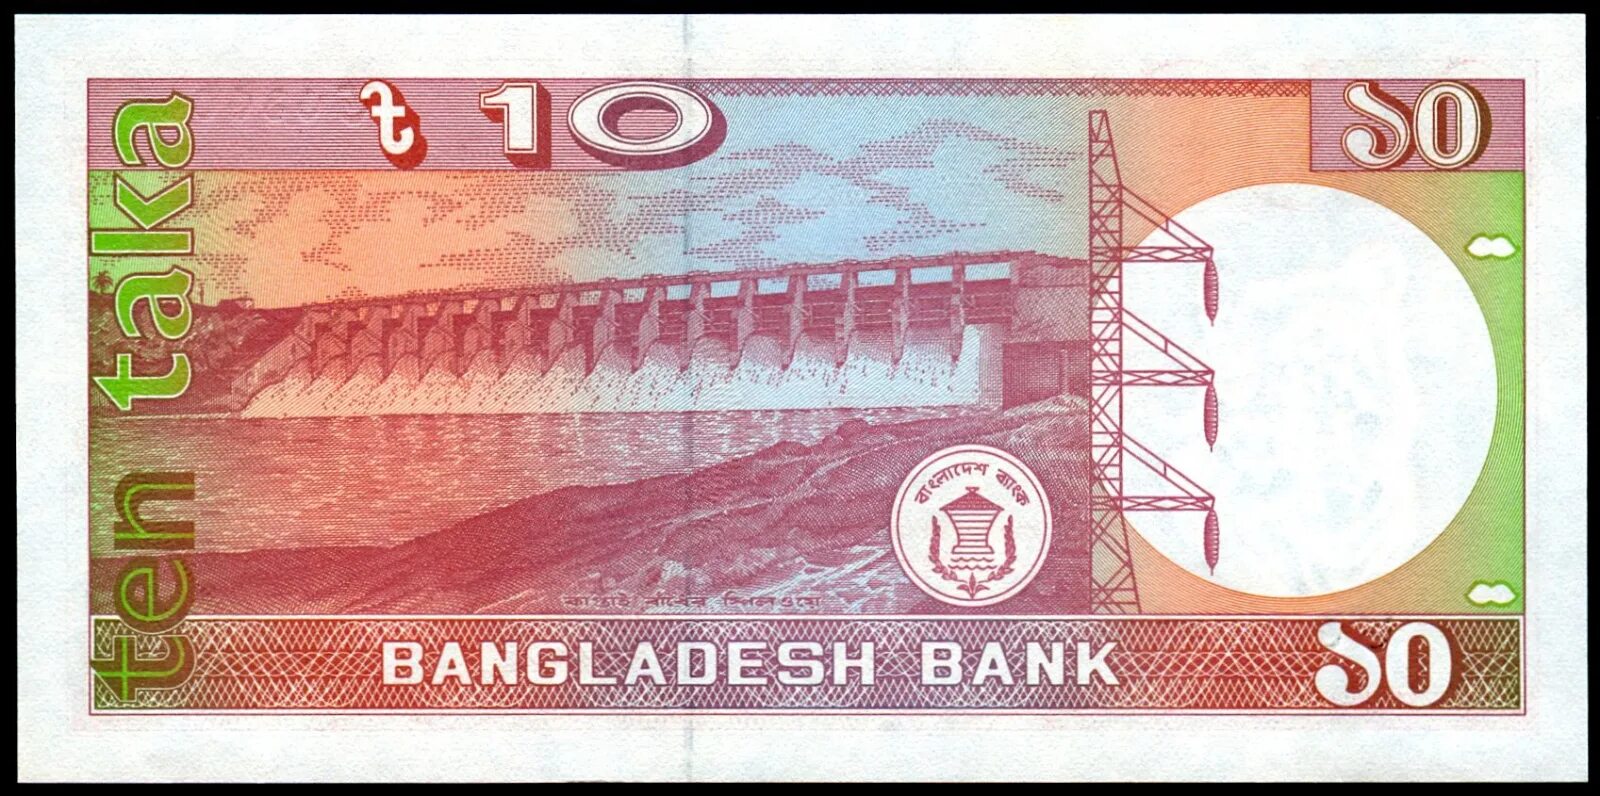 10 Така Бангладеш банкнота. Бангладеш 10 така 1996. Бангладеш банк банкноты. Банкноты Бангладеш 40 така. Така 10